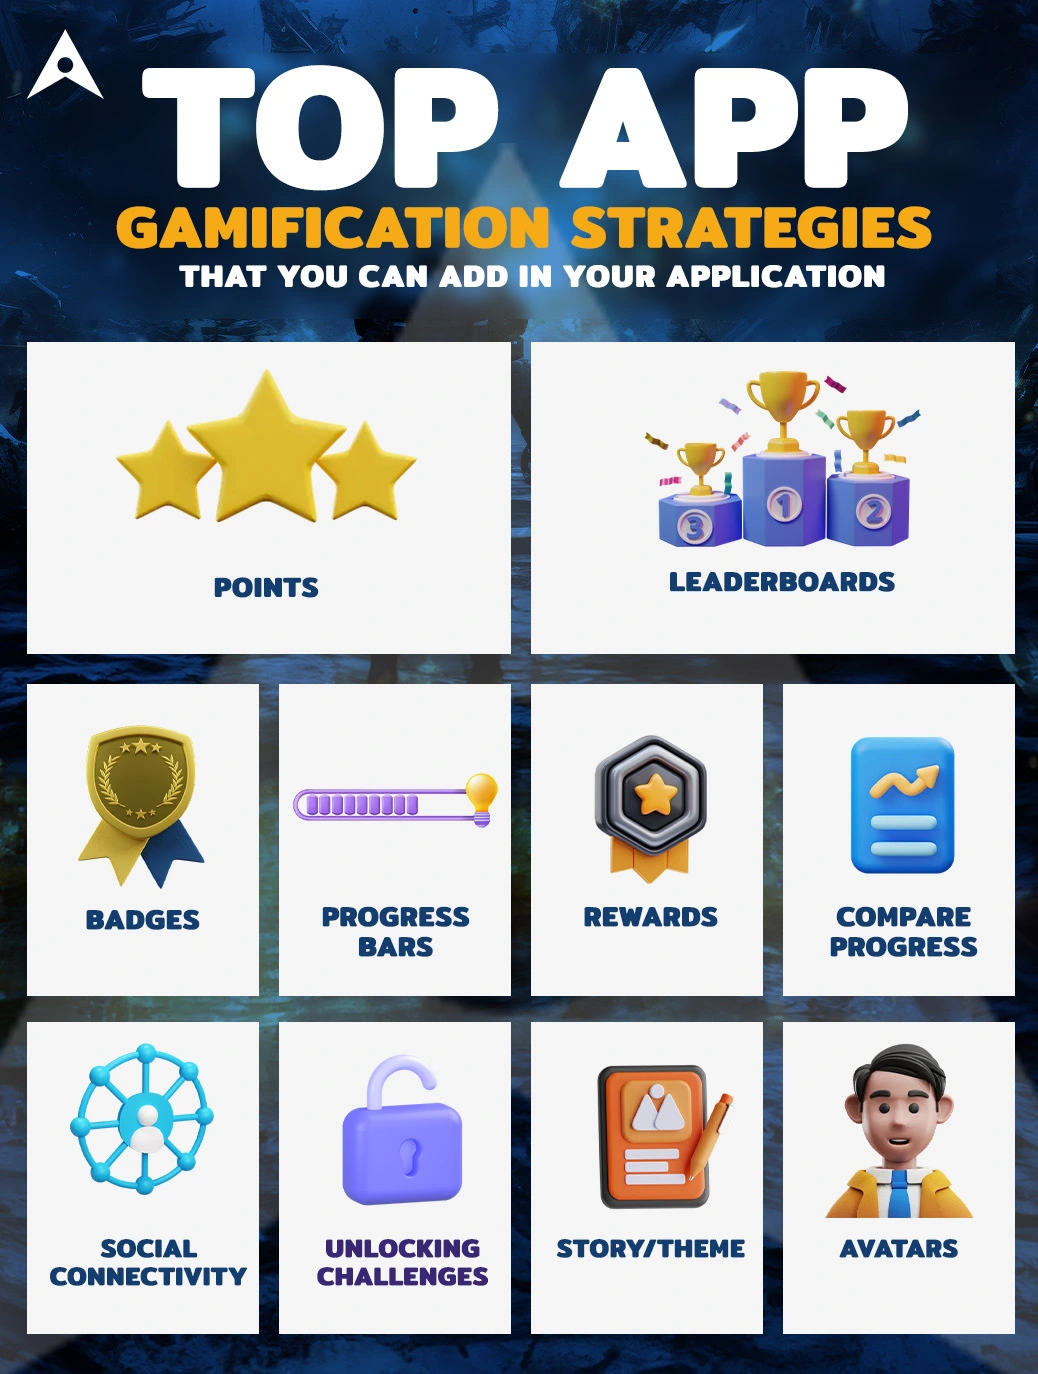 Top App Gamification Strategies